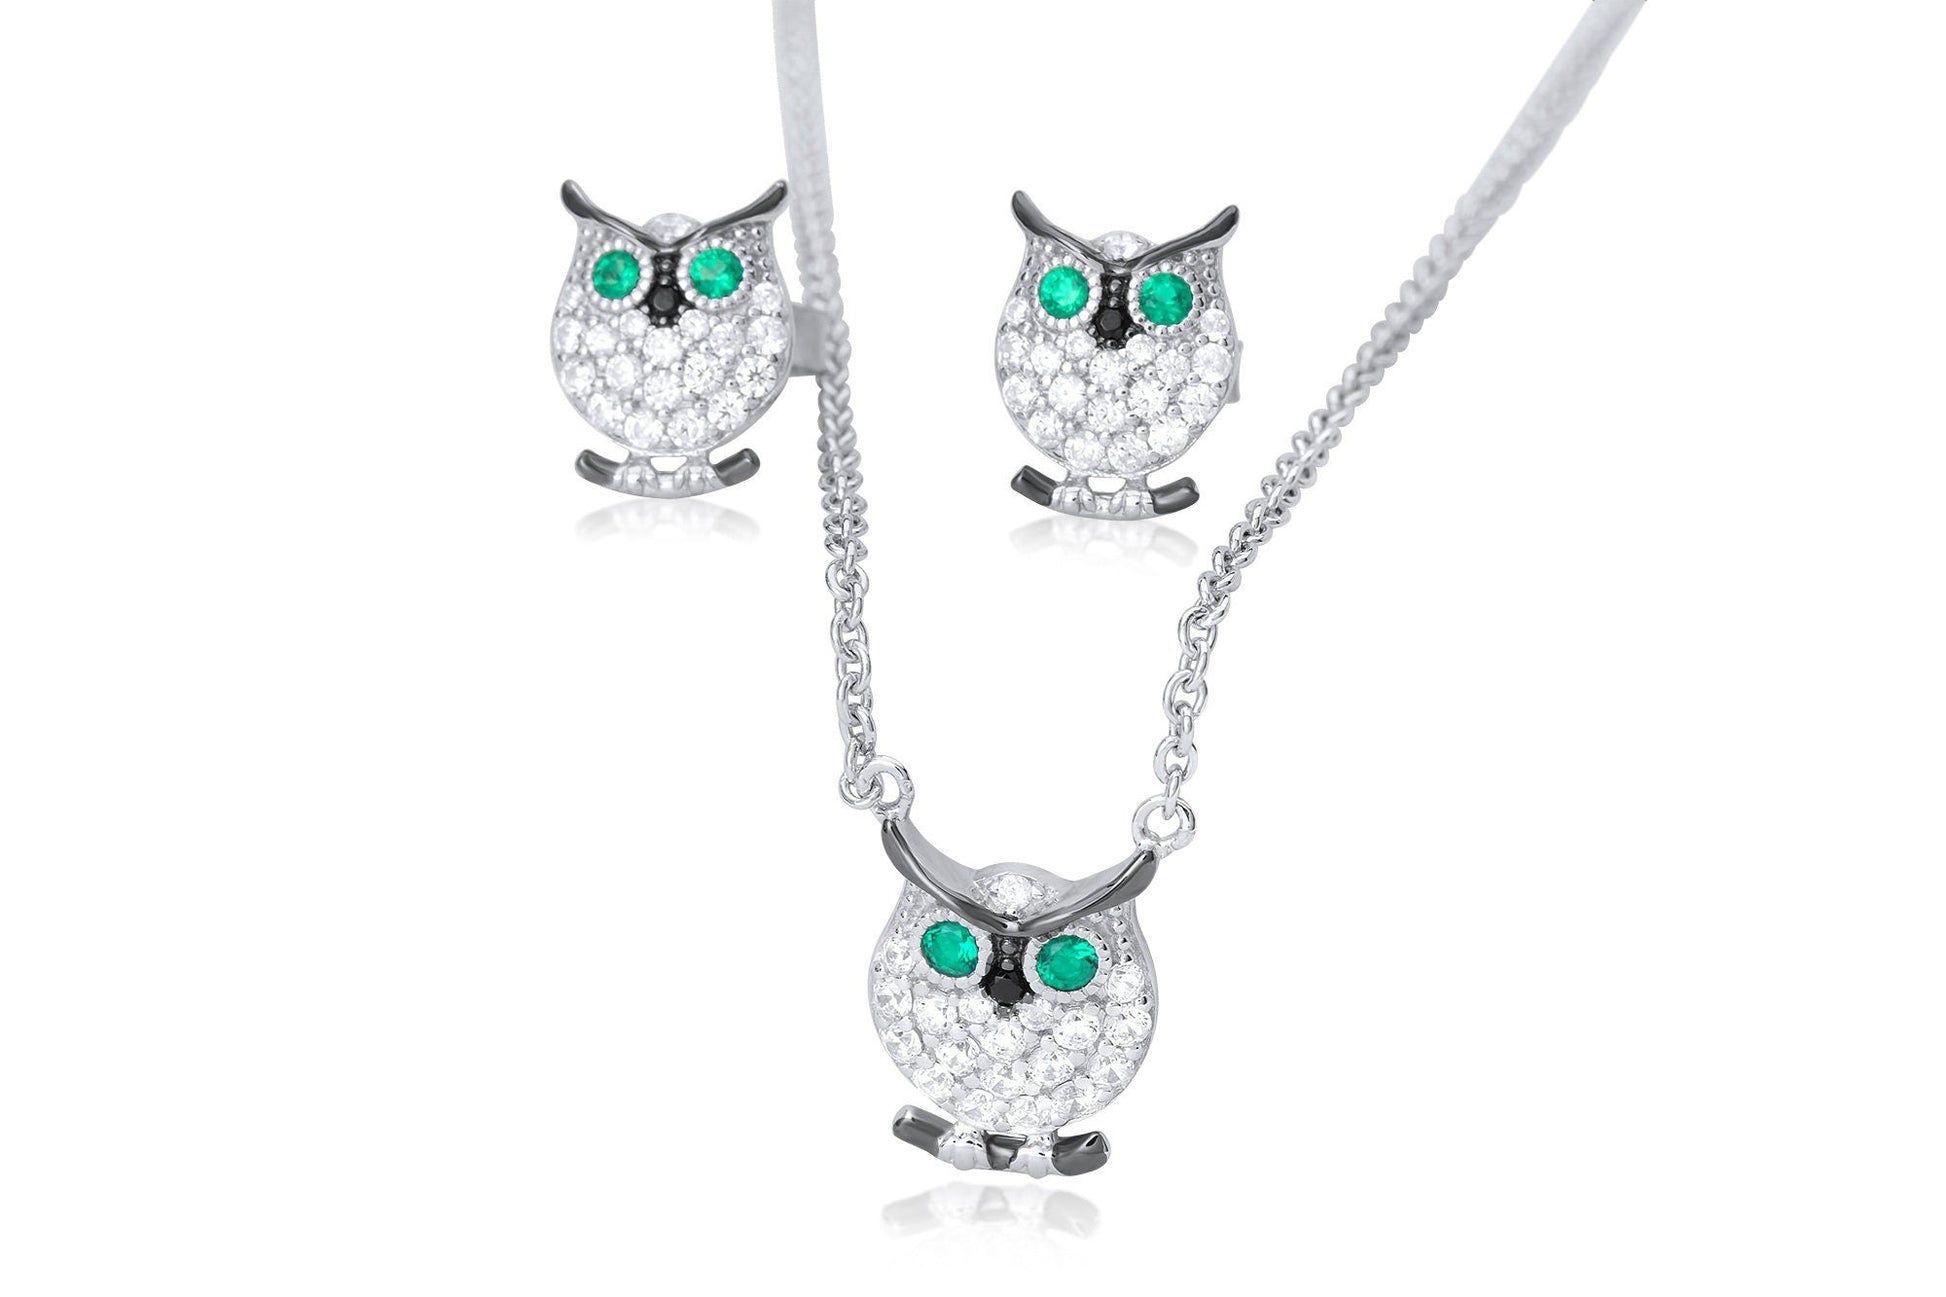 Sterling Silver OWL Stud Earrings